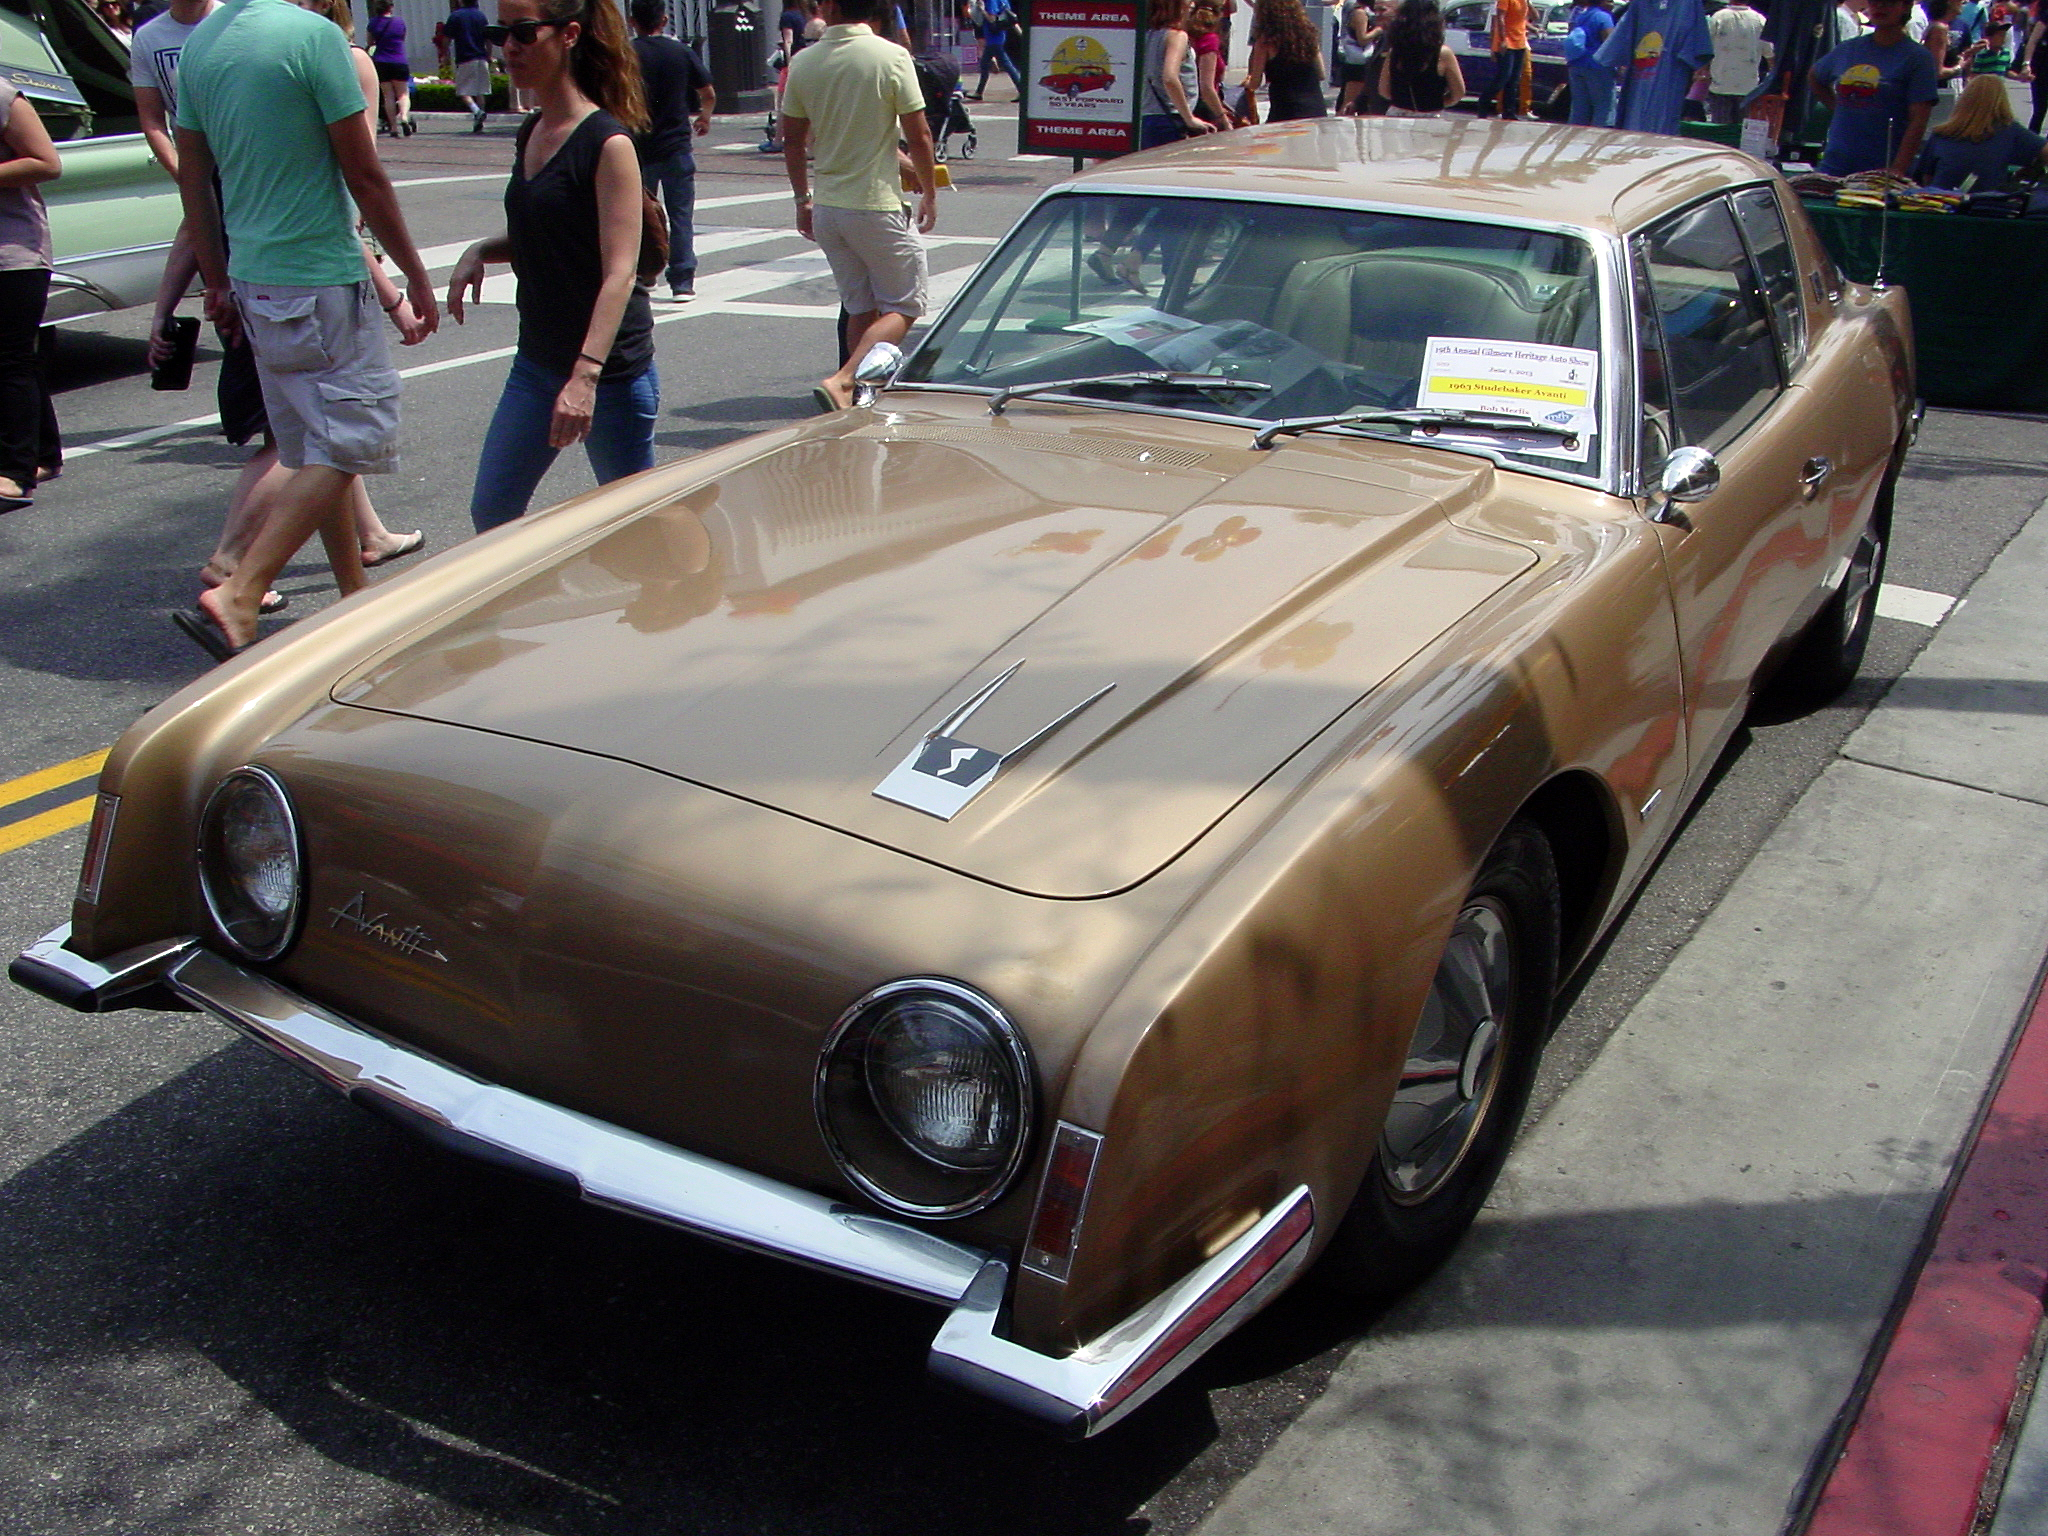 07a - 1963 Studebaker Avanti (E) | Flickr - Photo Sharing!